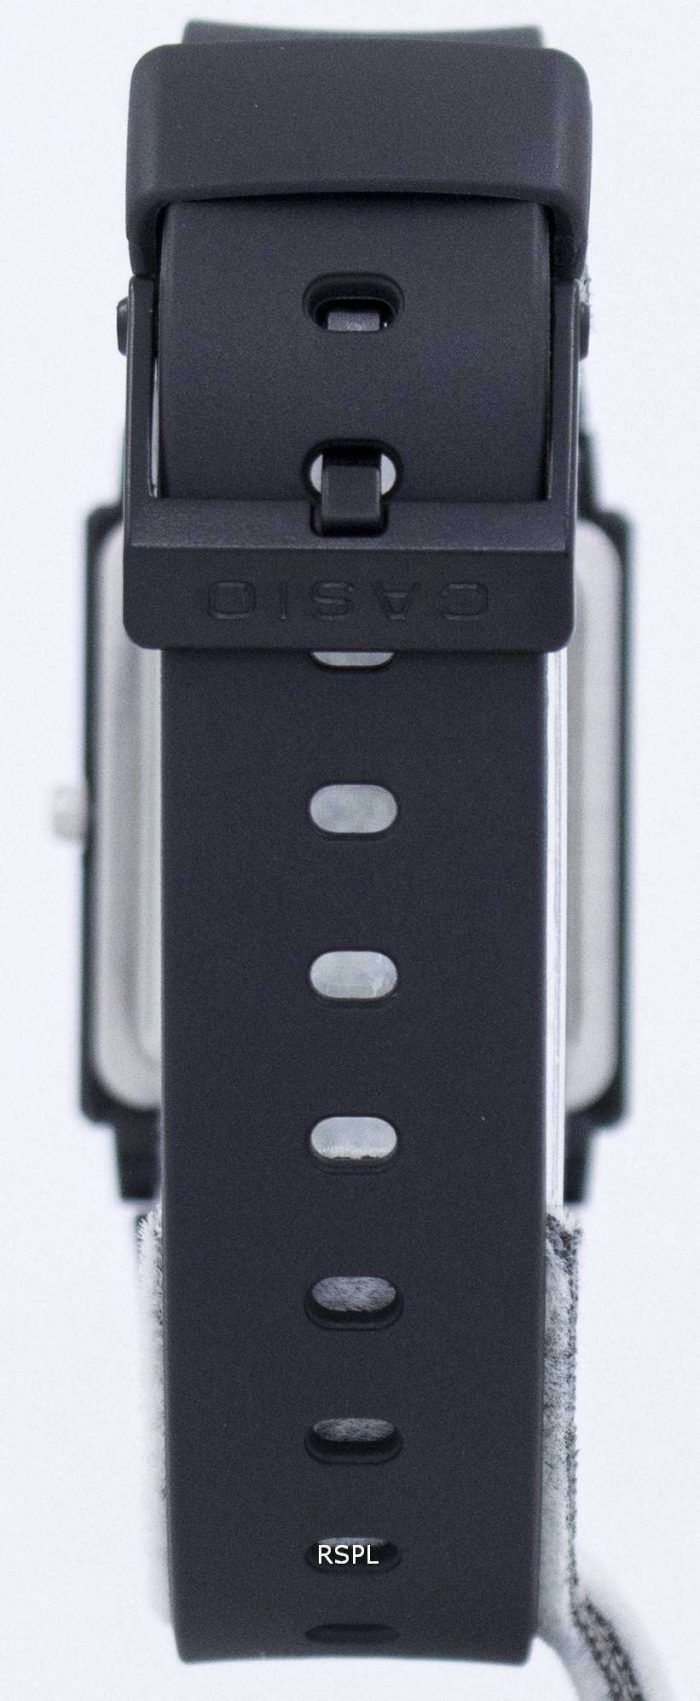 Casio Analog Quartz MQ-27-1B MQ27-1B Men's Watch